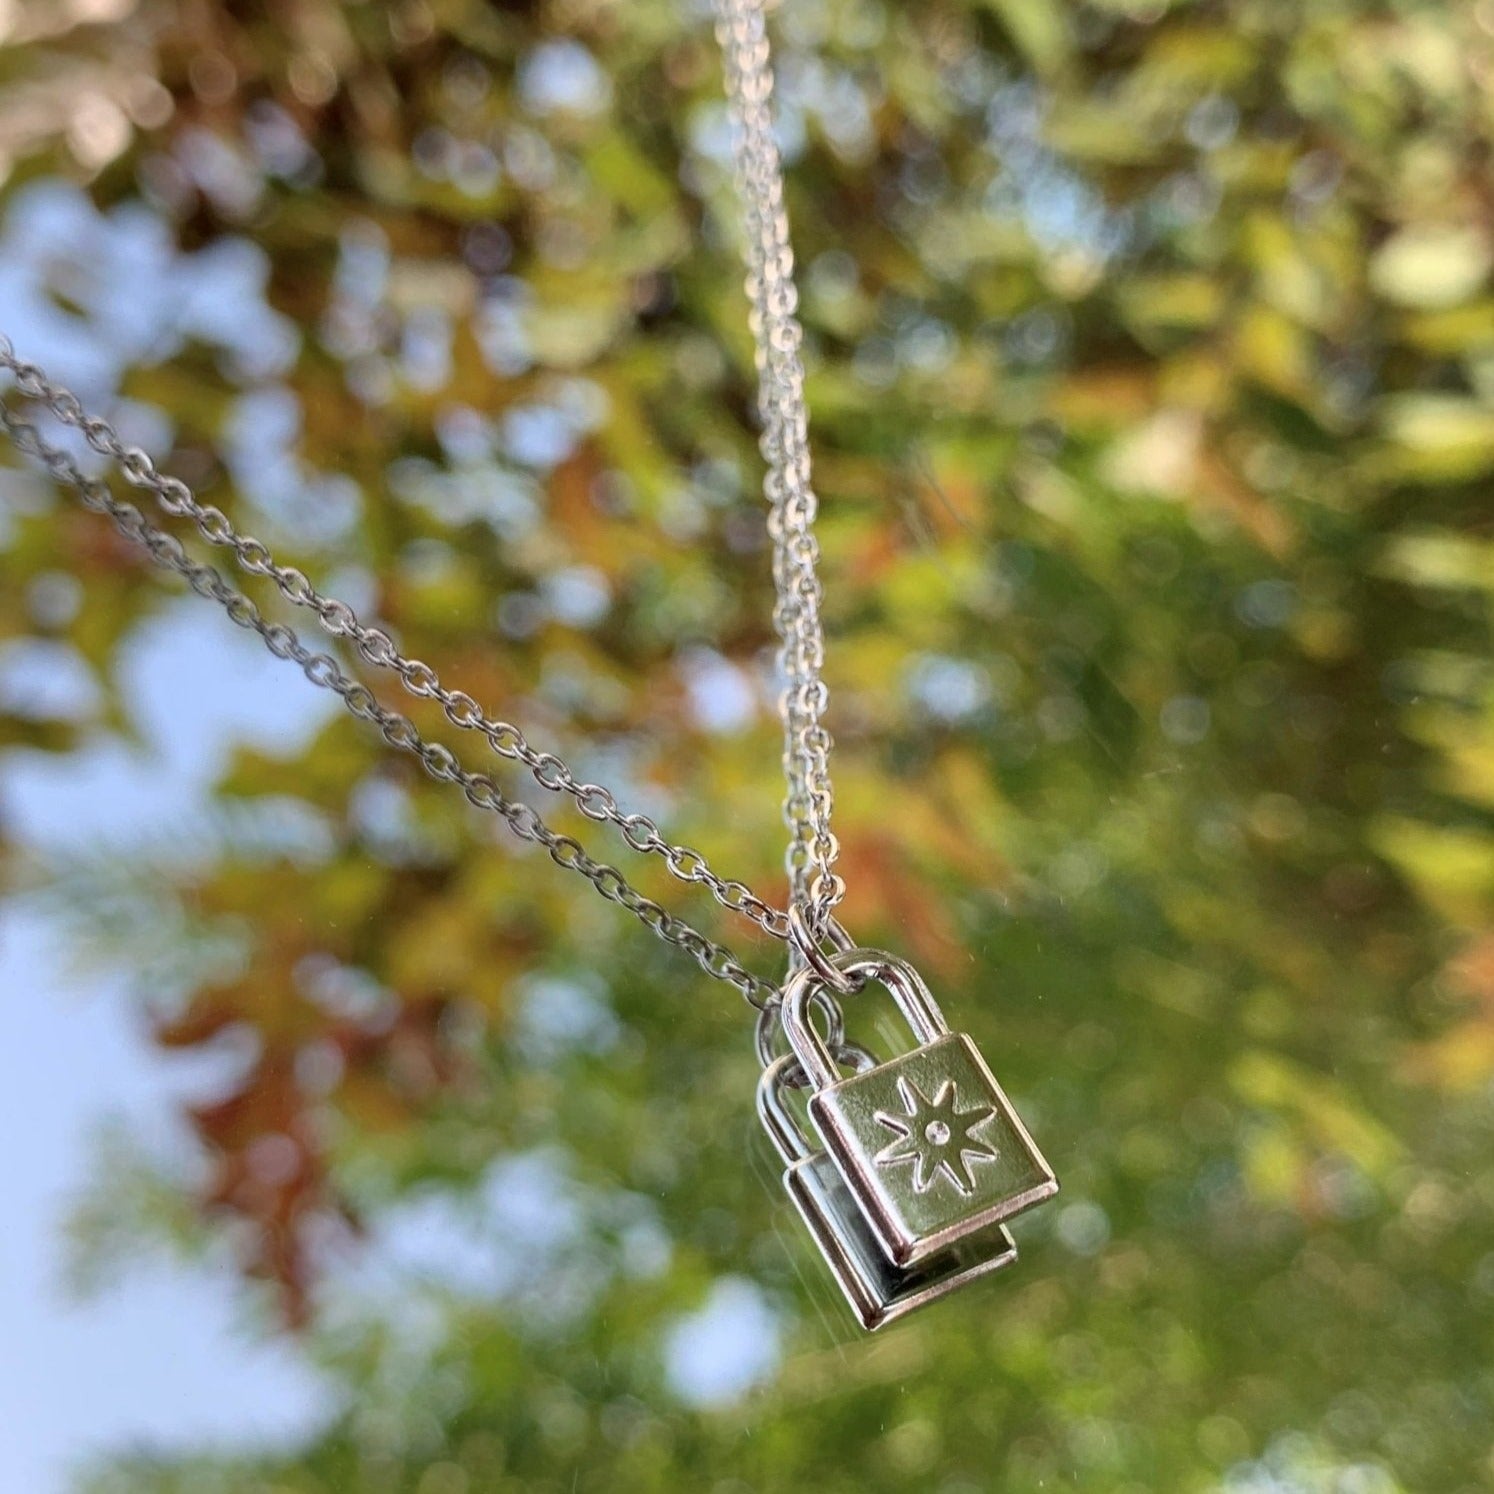 Dainty Silver Lock Star Pendant Necklace For Women - Boutique Wear